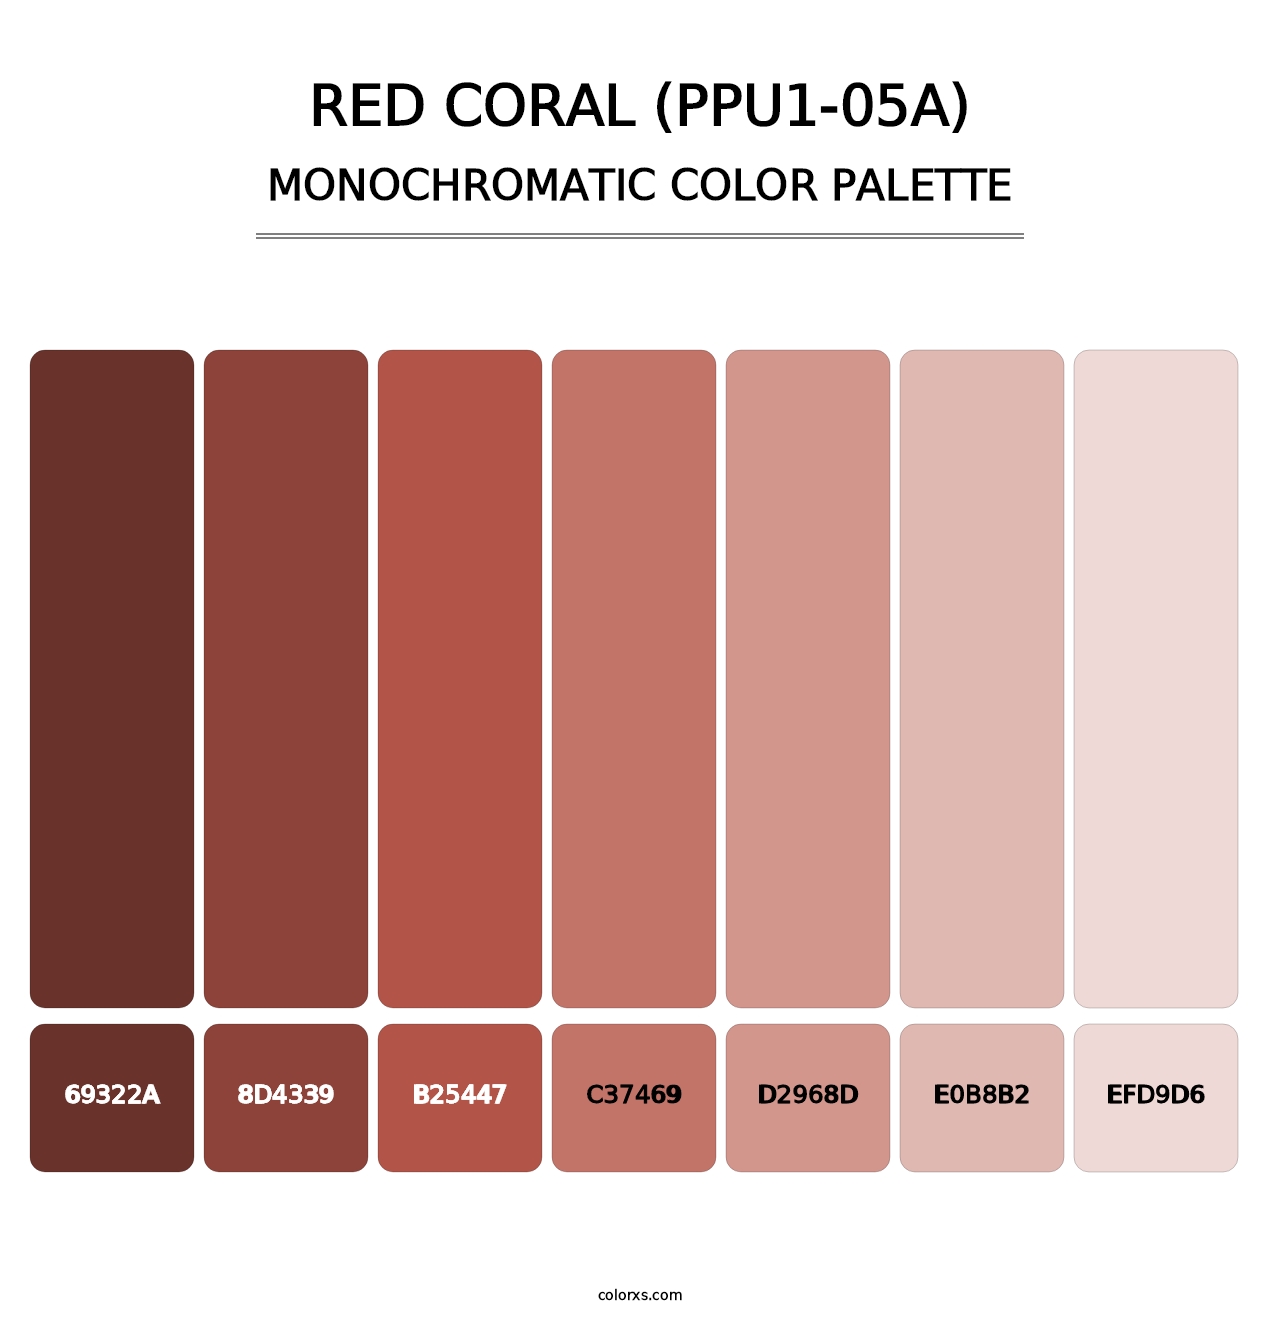 Red Coral (PPU1-05A) - Monochromatic Color Palette